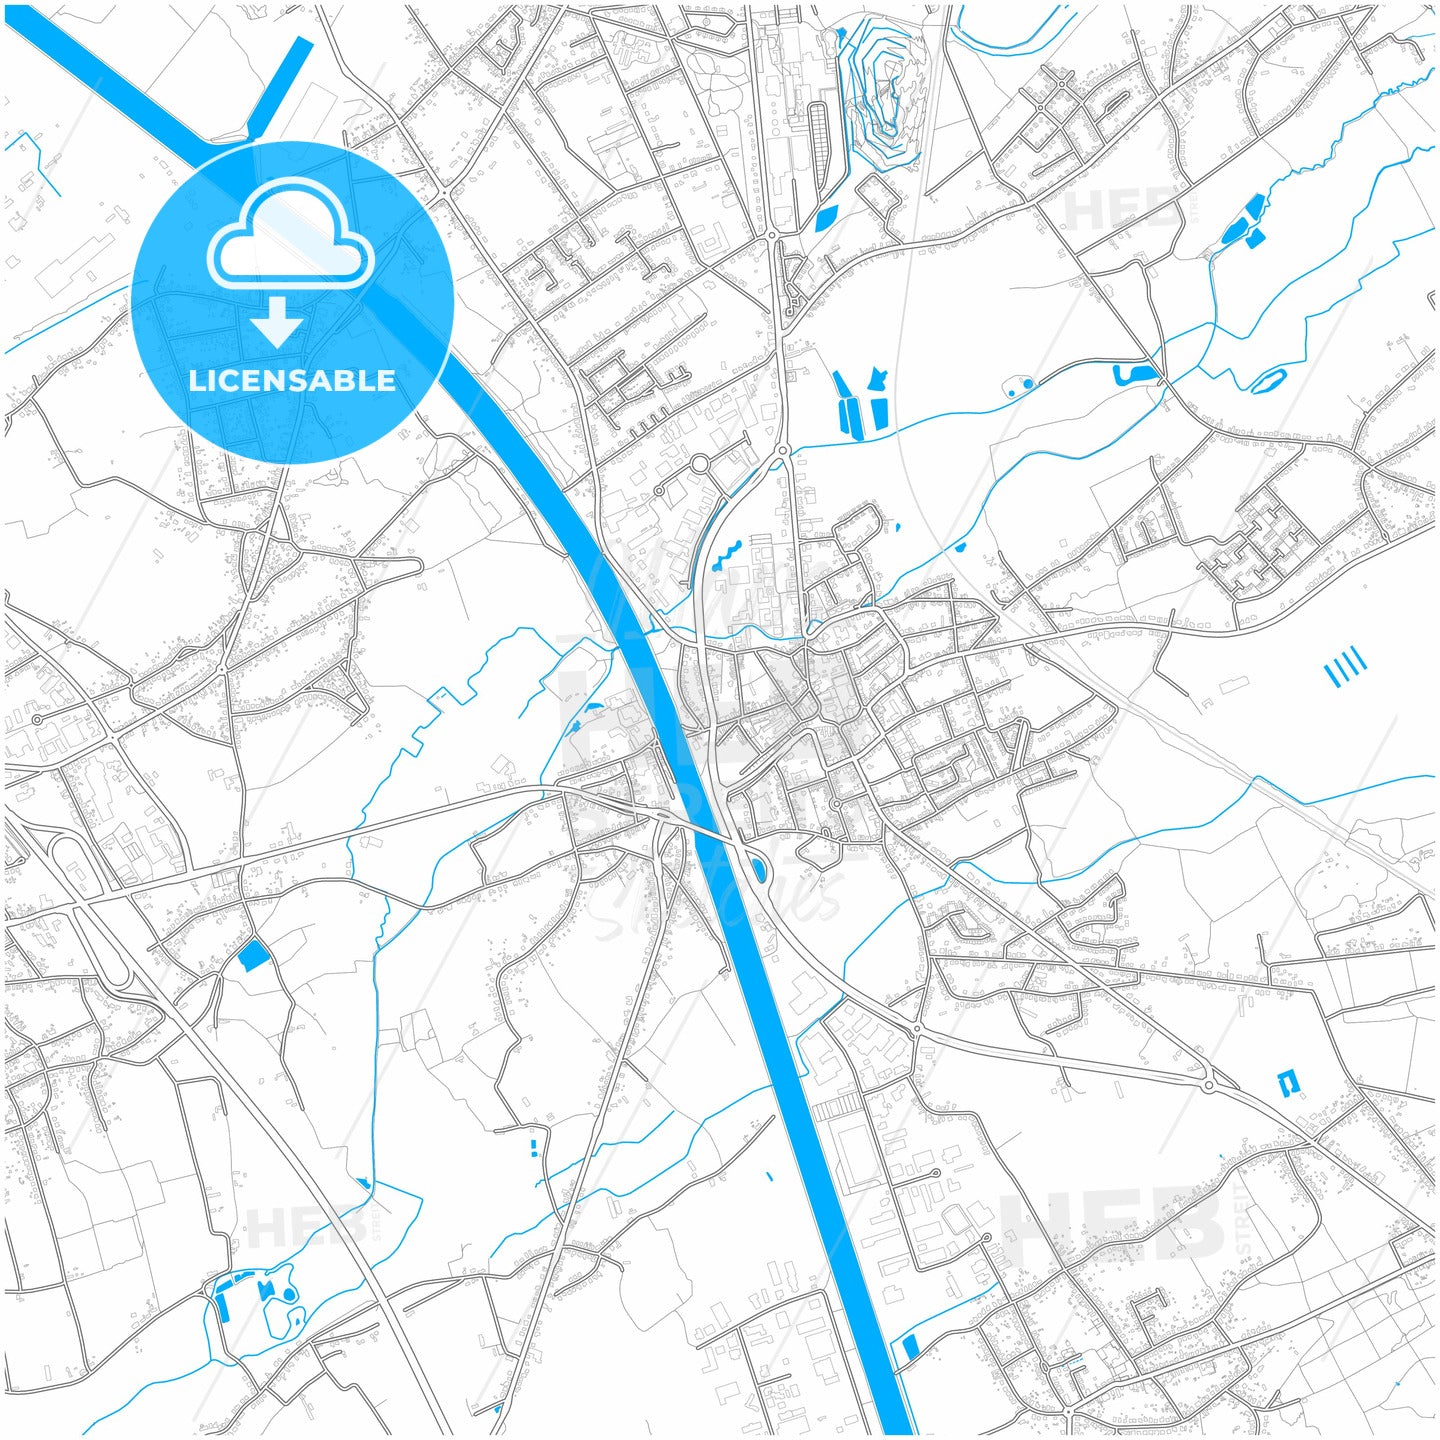 Beringen, Limburg, Belgium, city map with high quality roads.